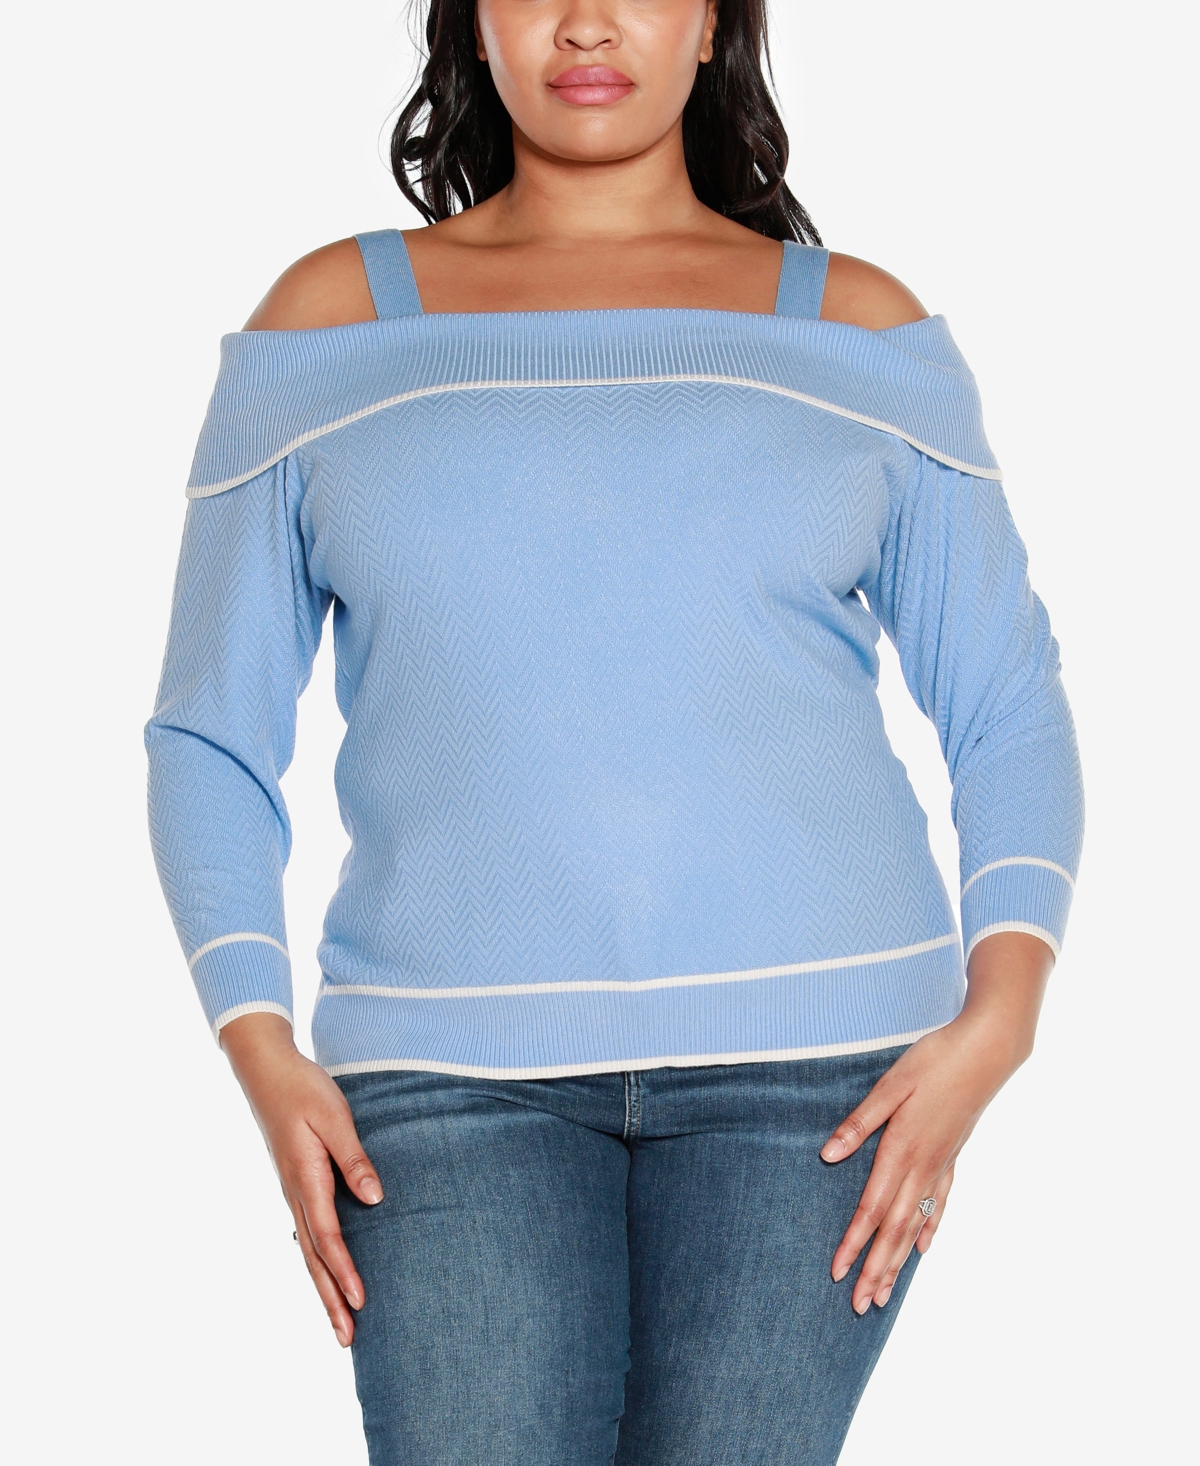 Belldini Black Label Plus Size Off-The-Shoulder Sweater